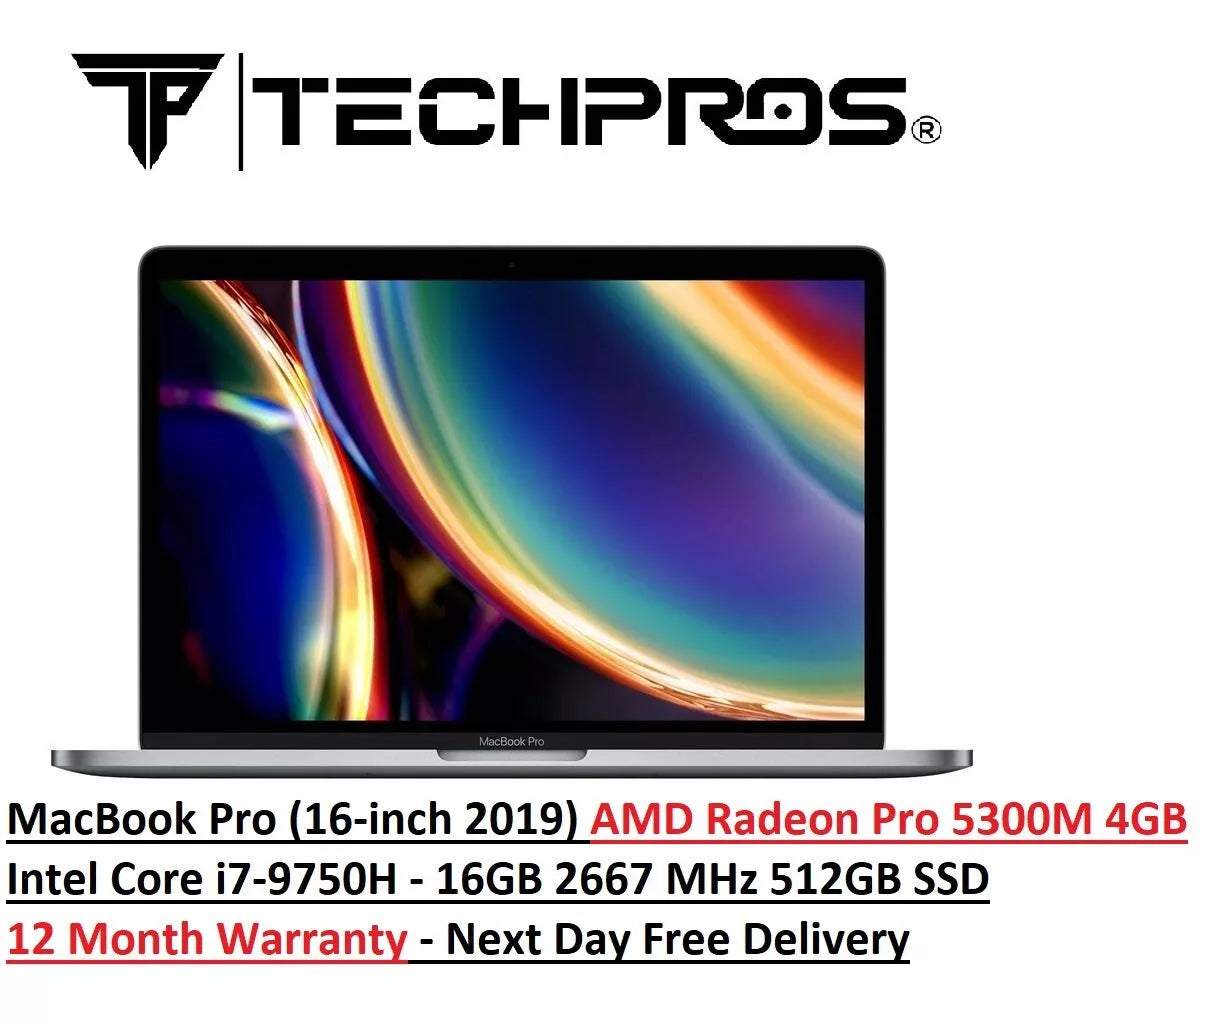 MacBook Pro (16-inch 2019) Core i7 @ 2.6GHz 6-Core 16GB 512GB SSD AMD Radeon Pro